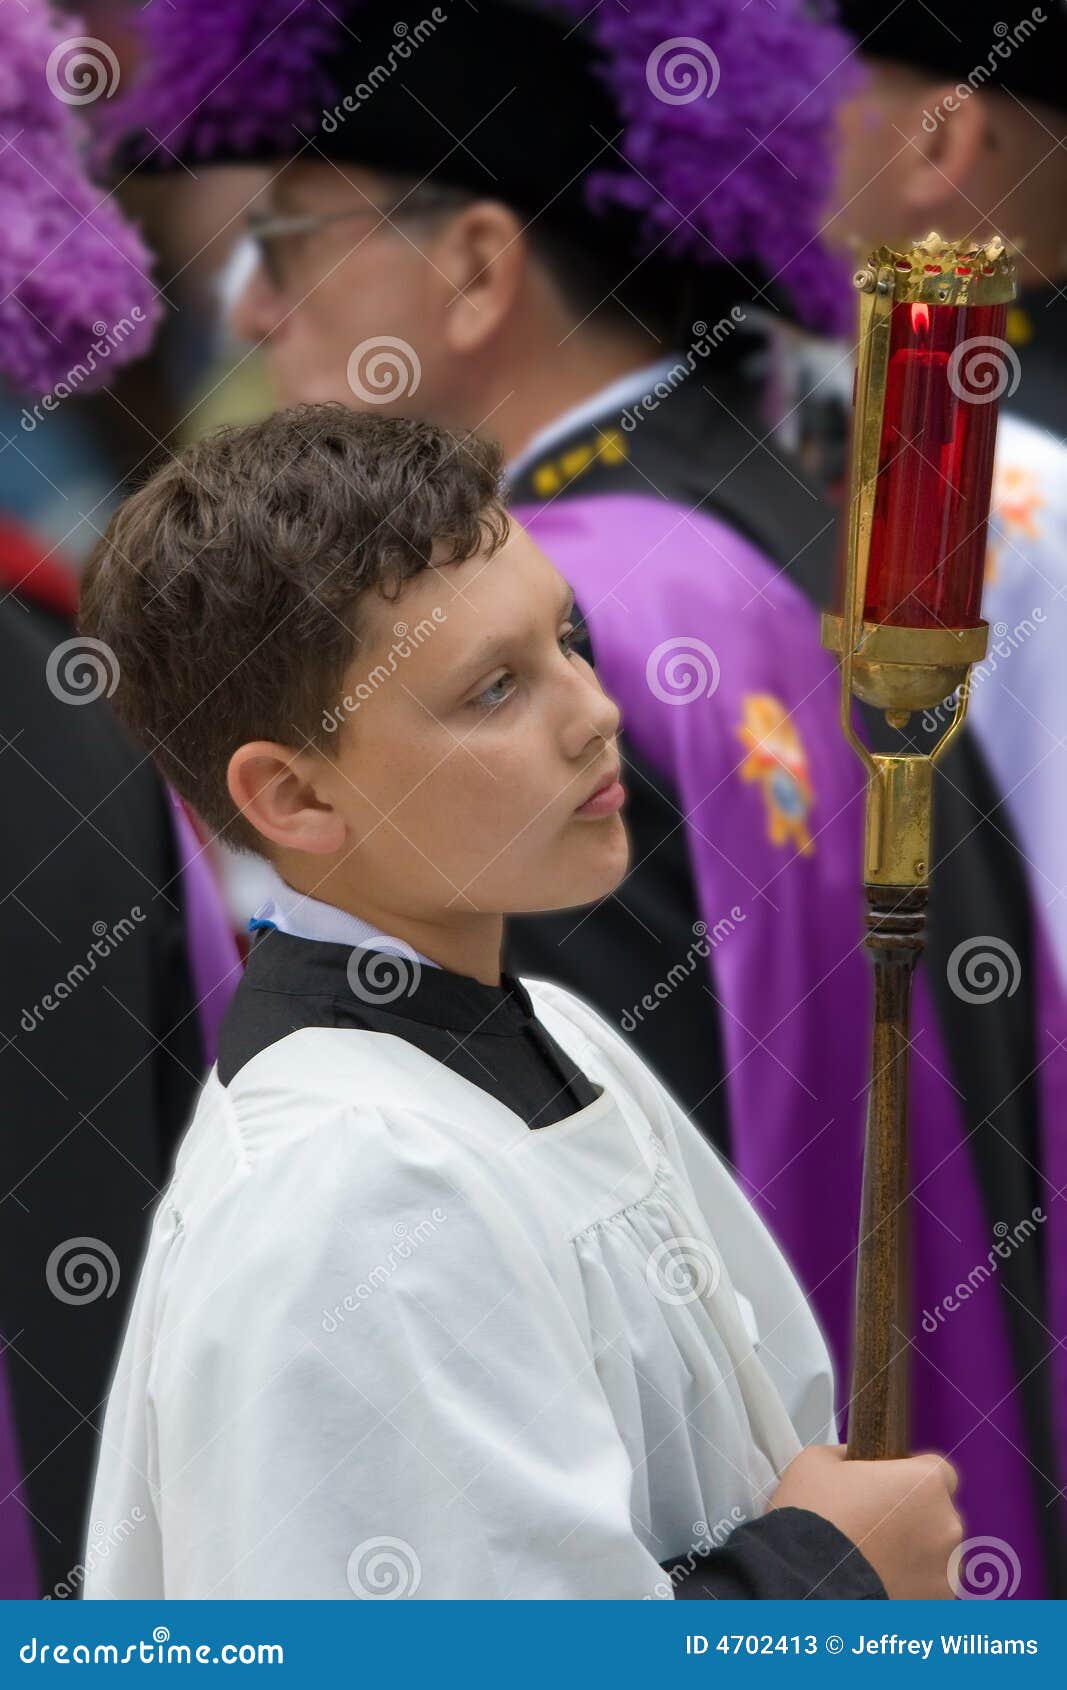 catholic altar boy